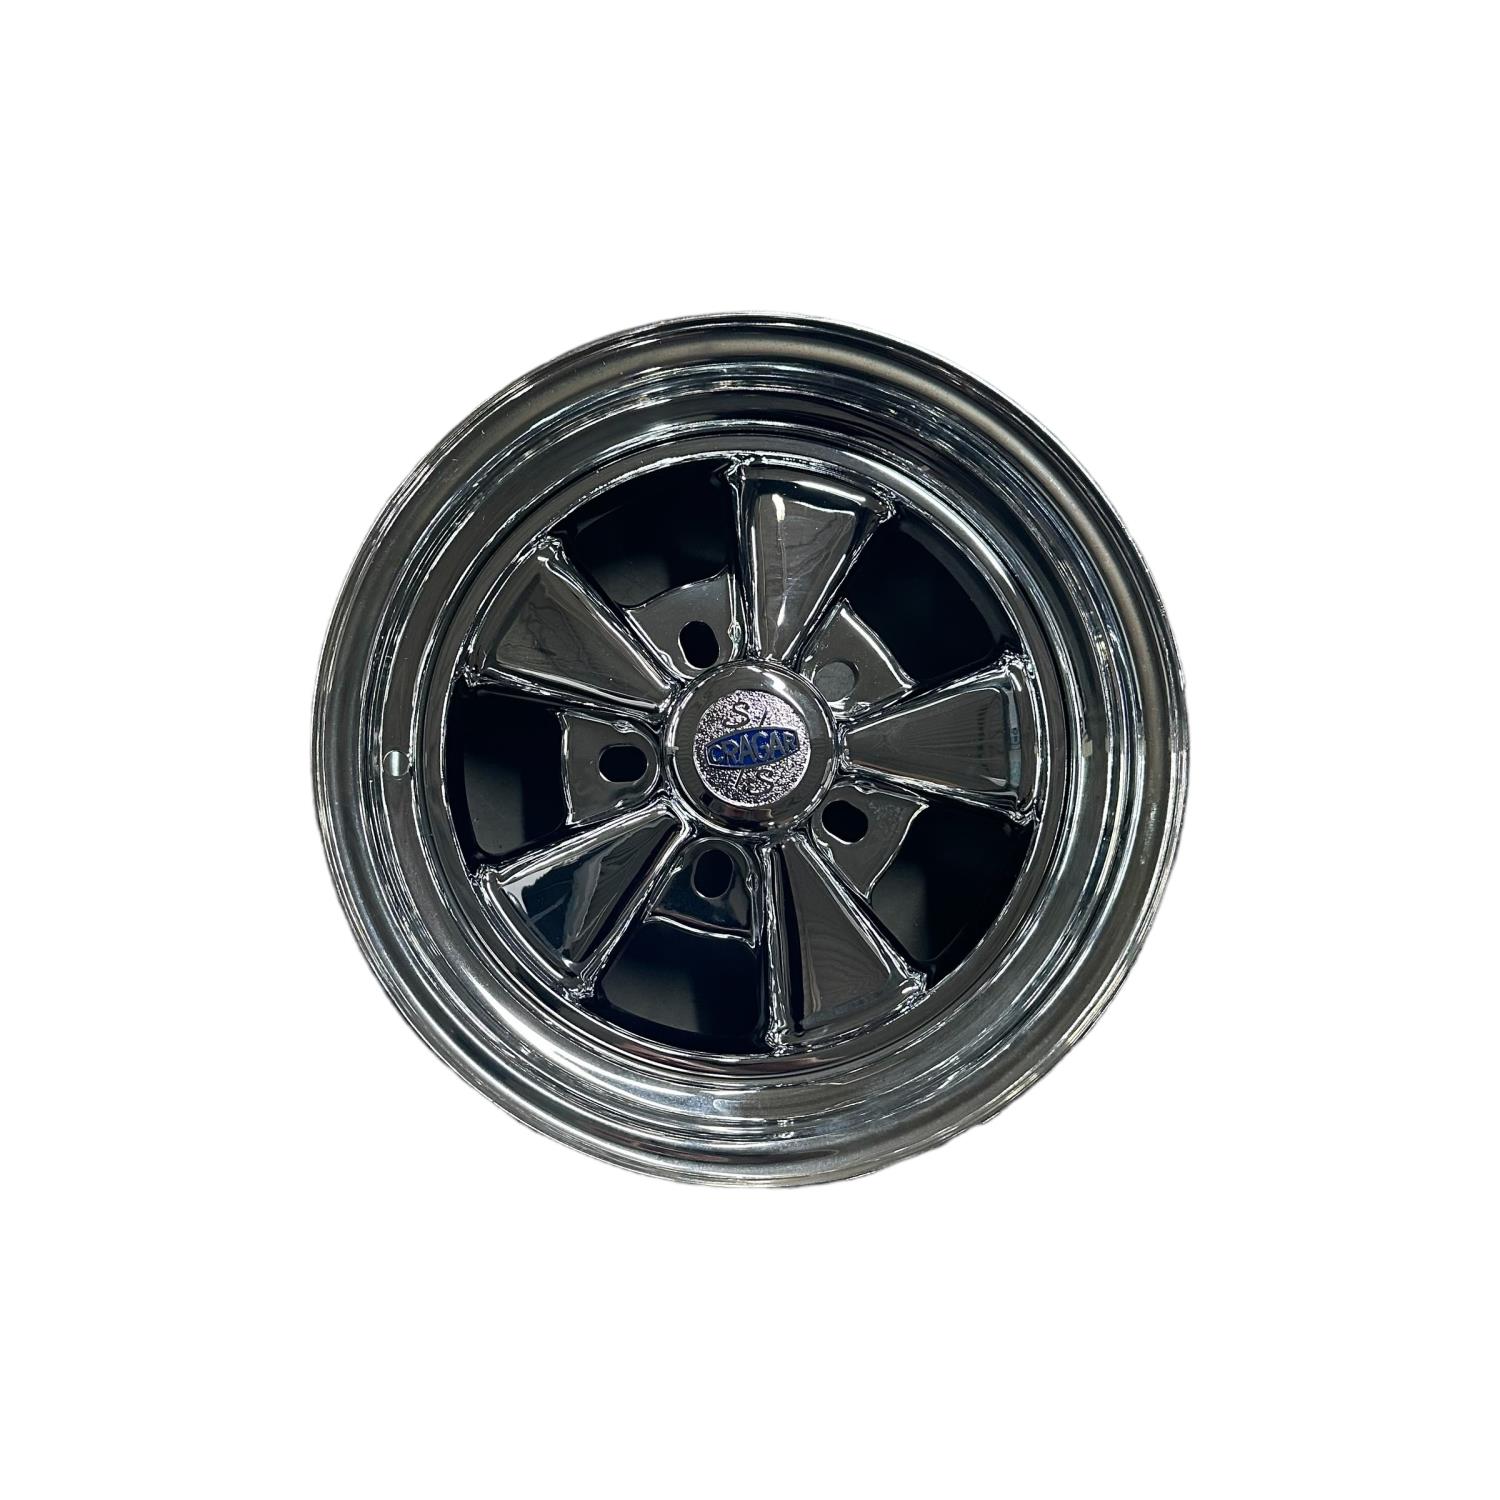 *BLEMISHED* 08/61 Series Super Sport Wheel Size: 14" x 6"